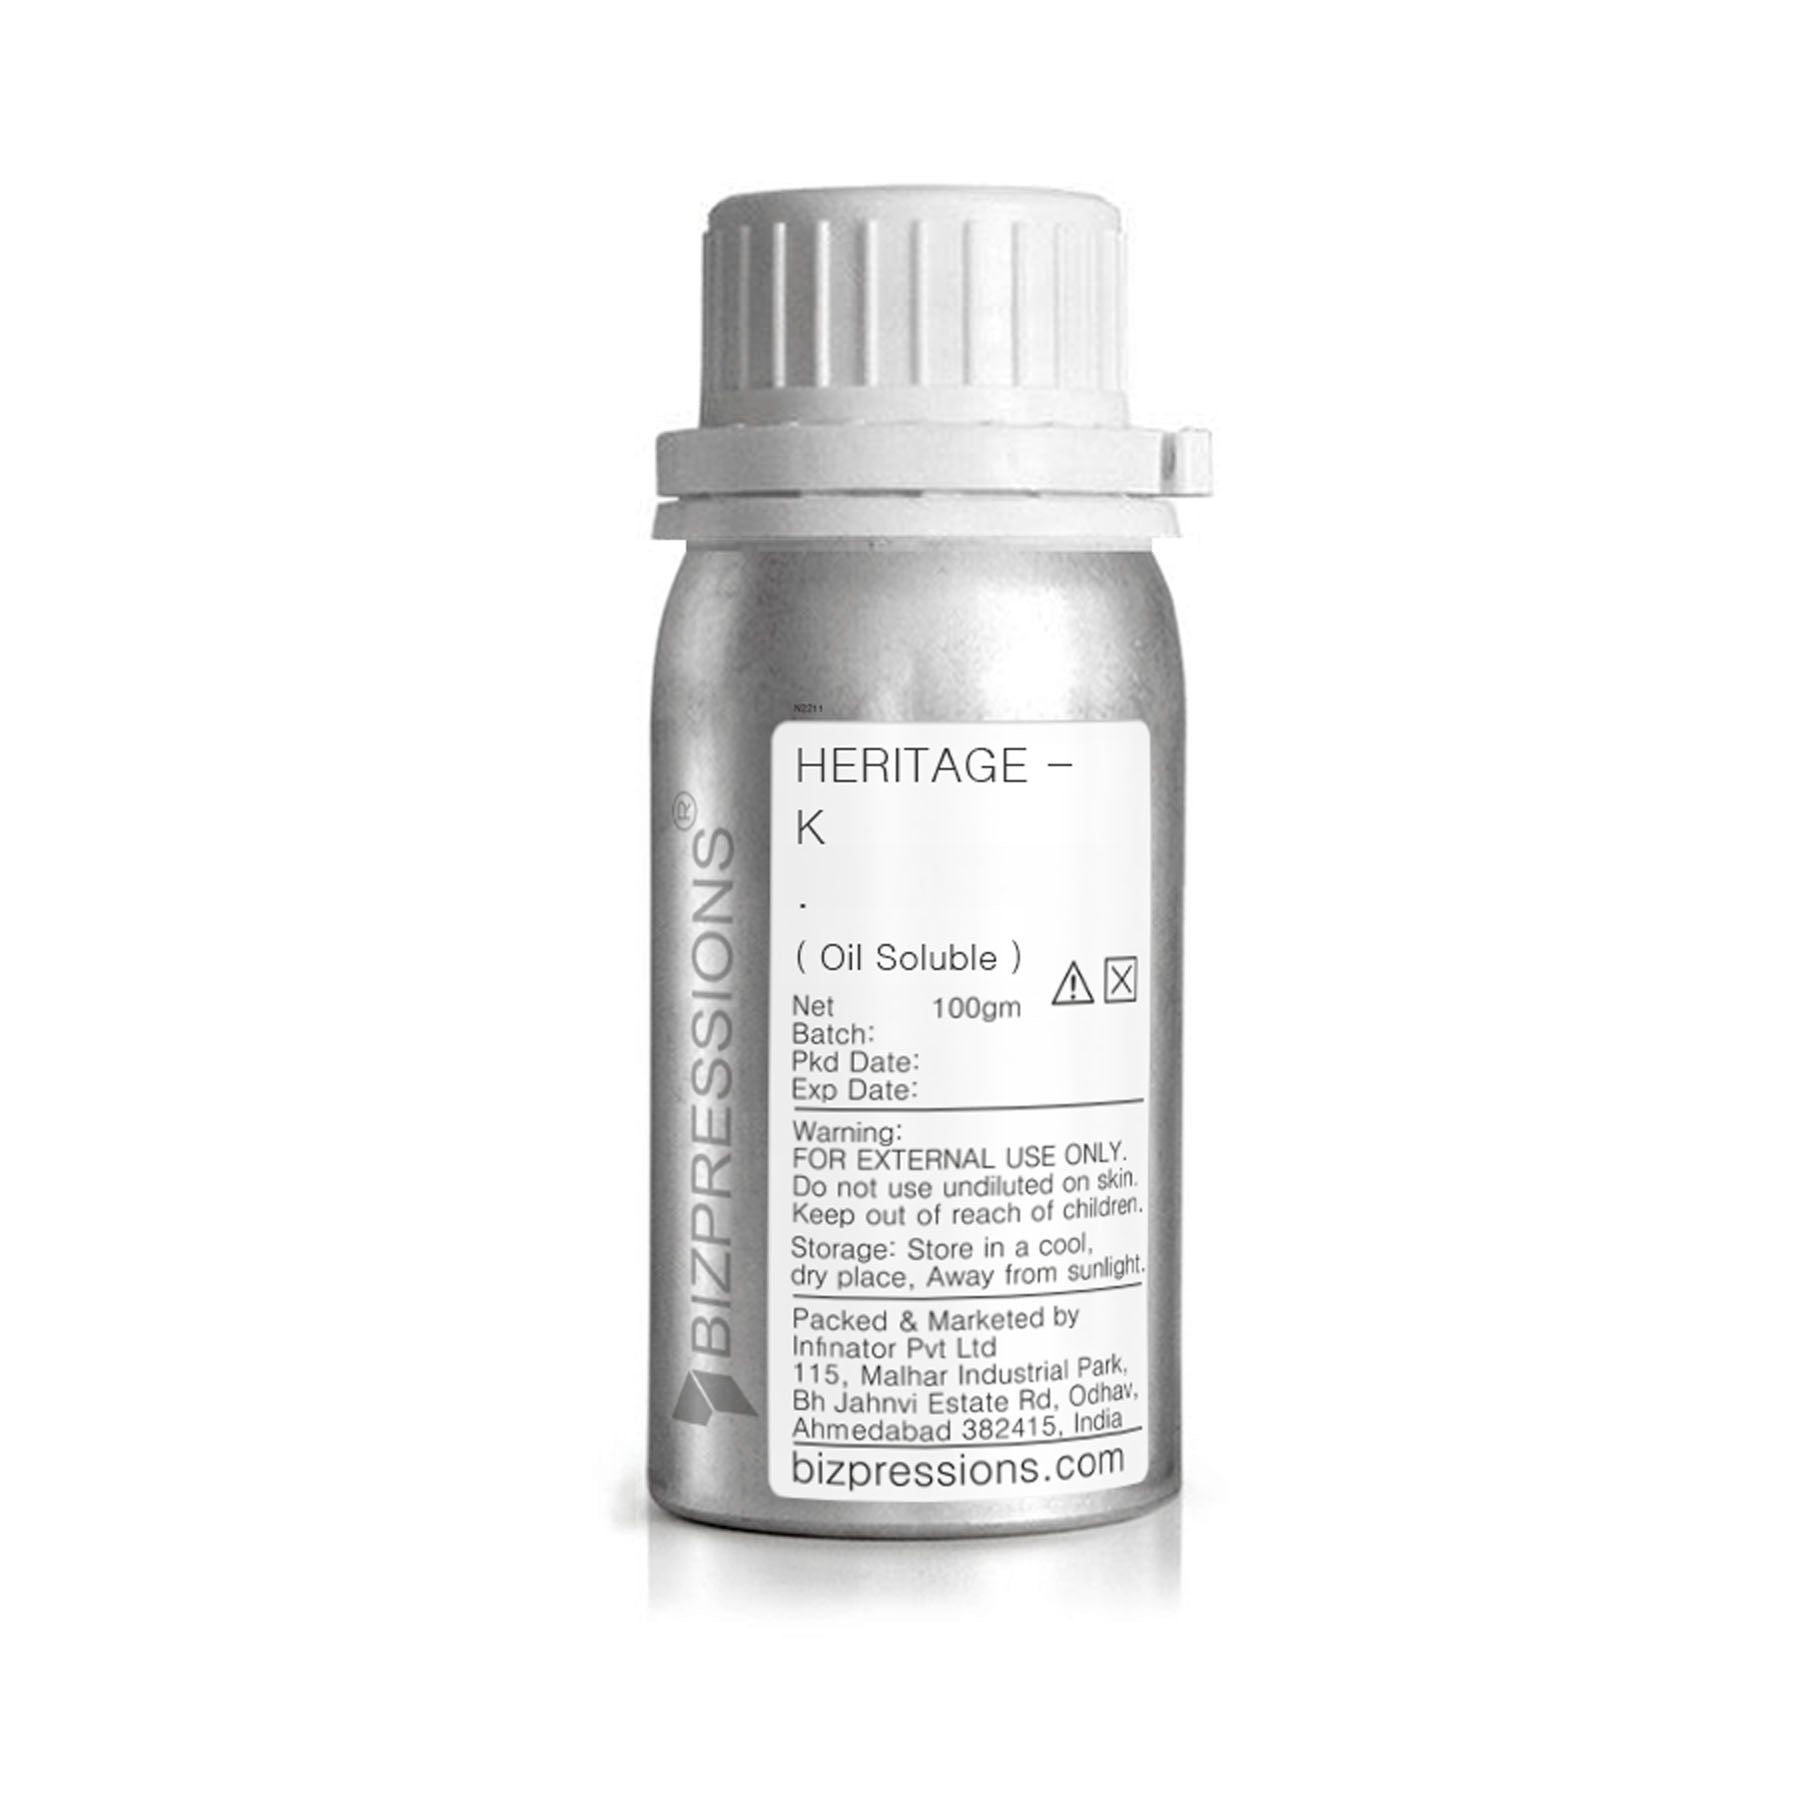 HERITAGE - K - Fragrance ( Oil Soluble ) - 100 gm